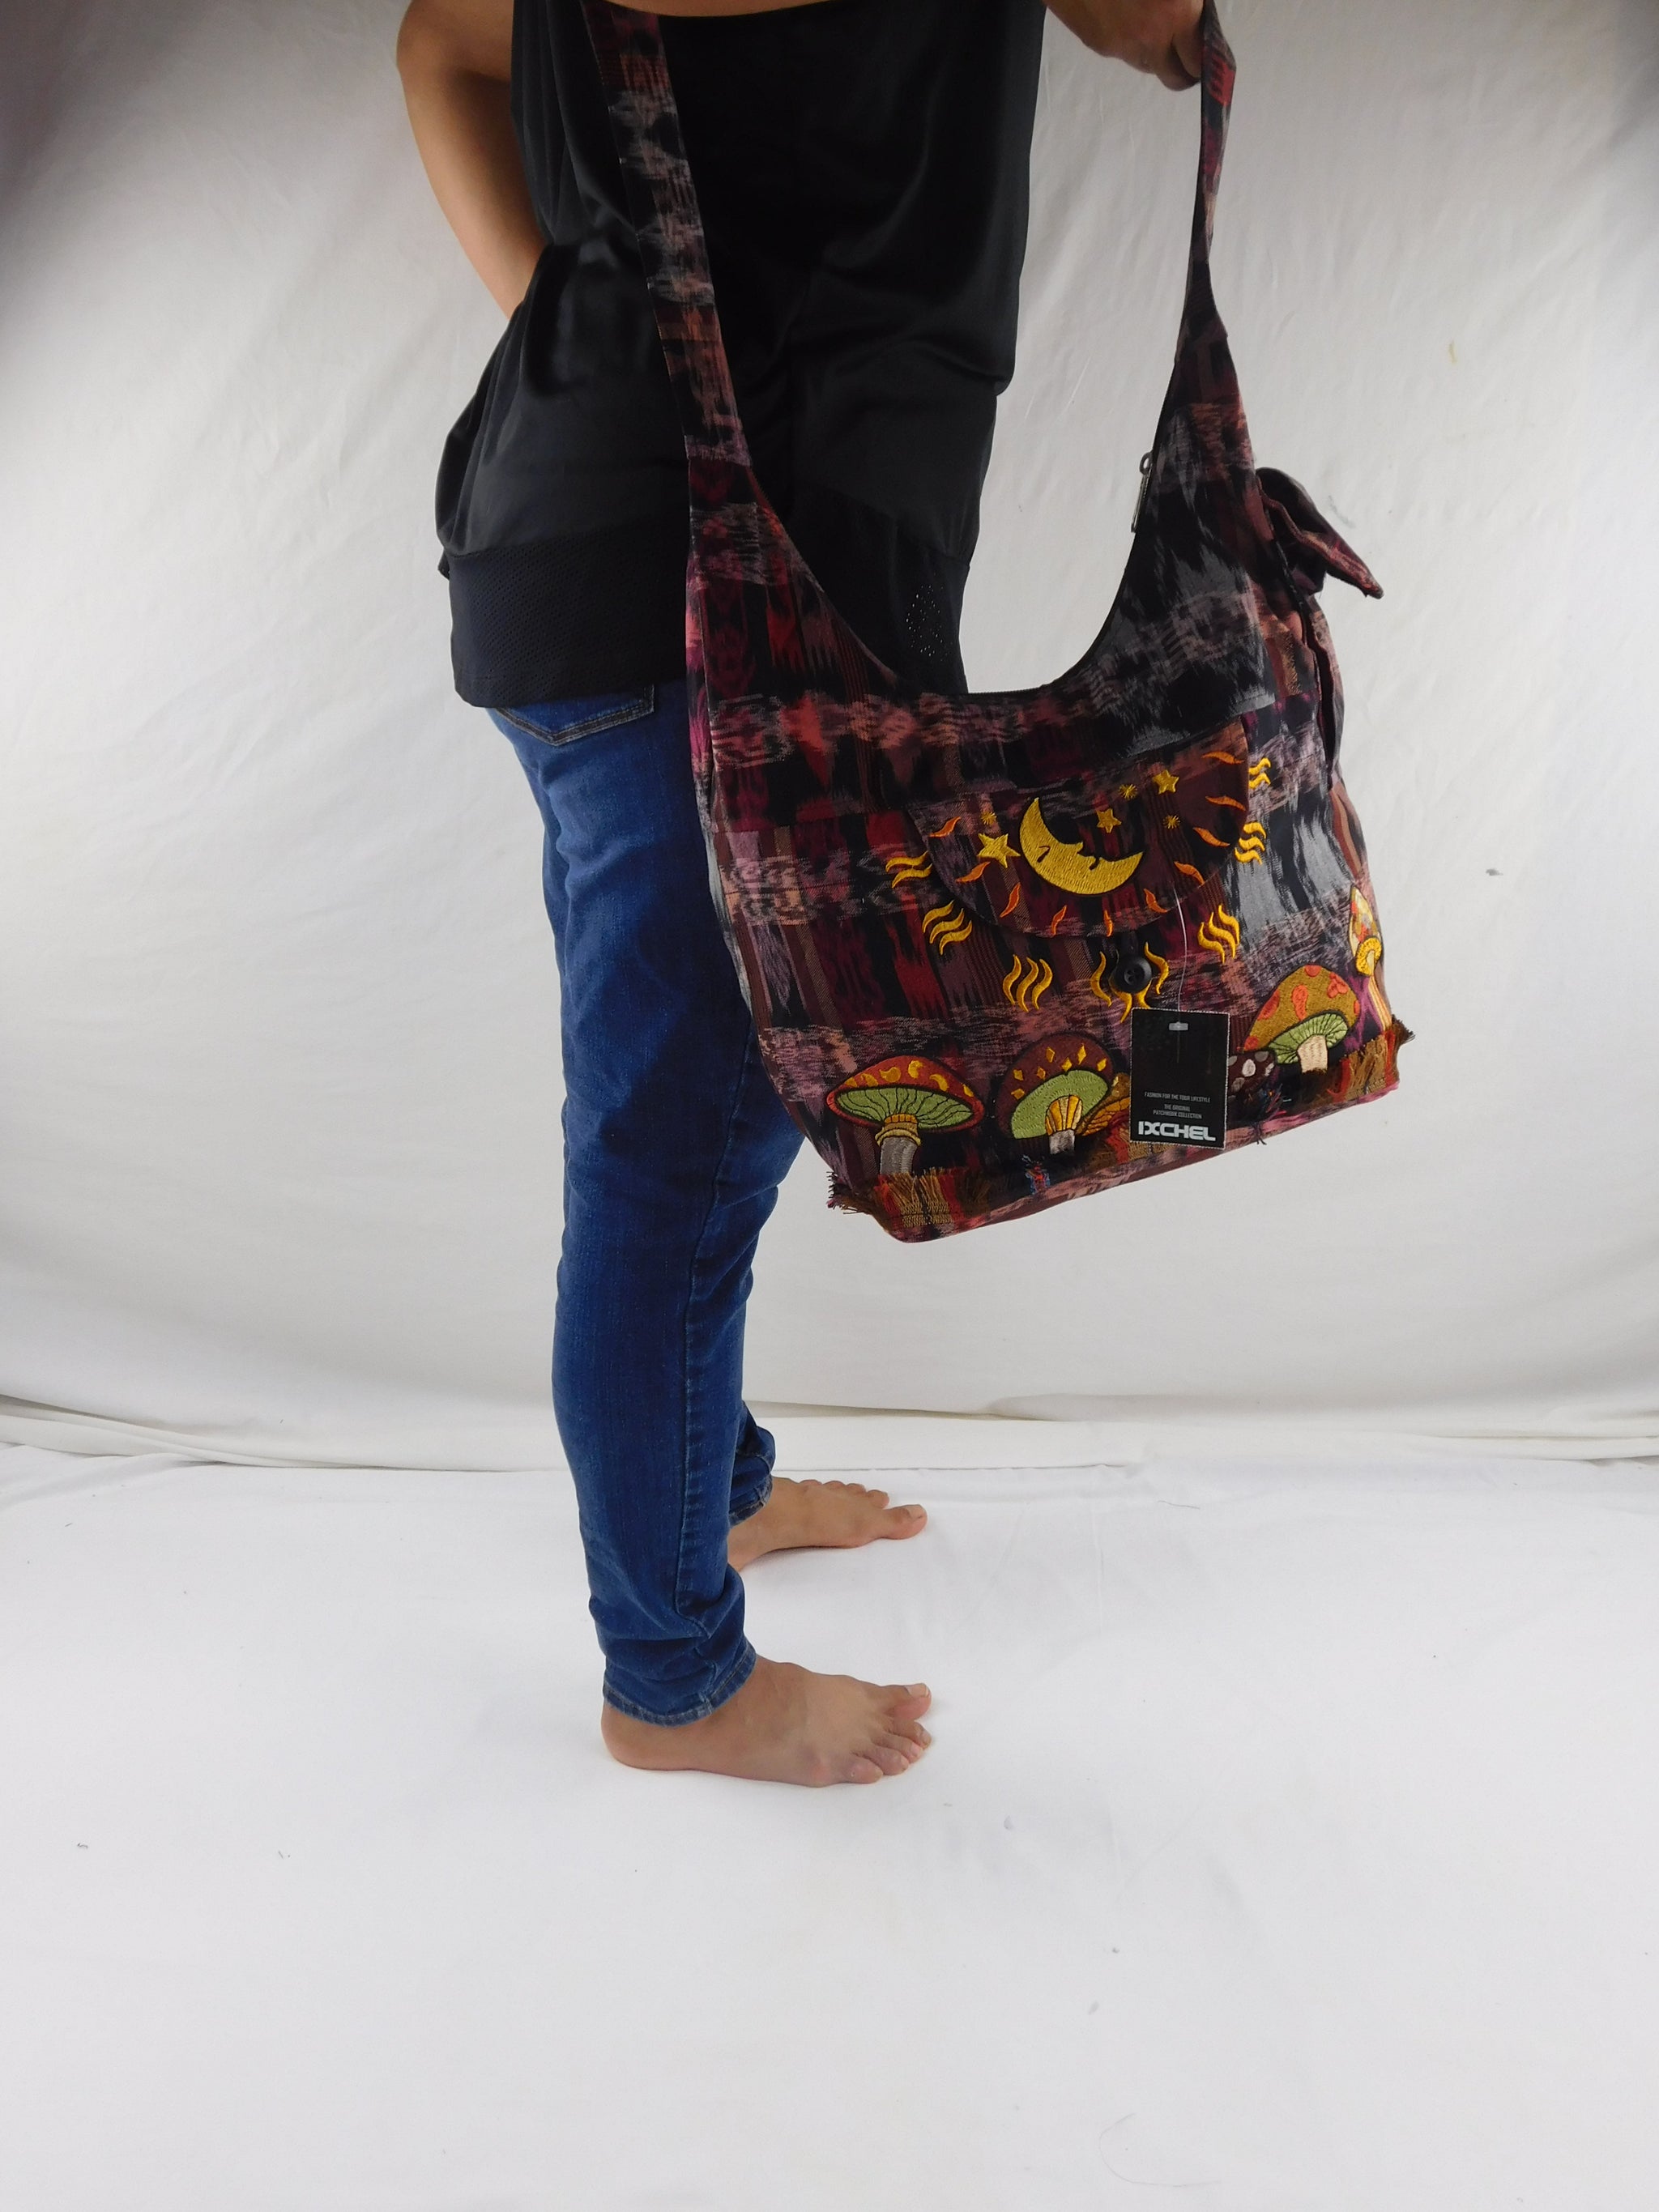 Hand Woven Saddle bag with Mushroom Embroidery